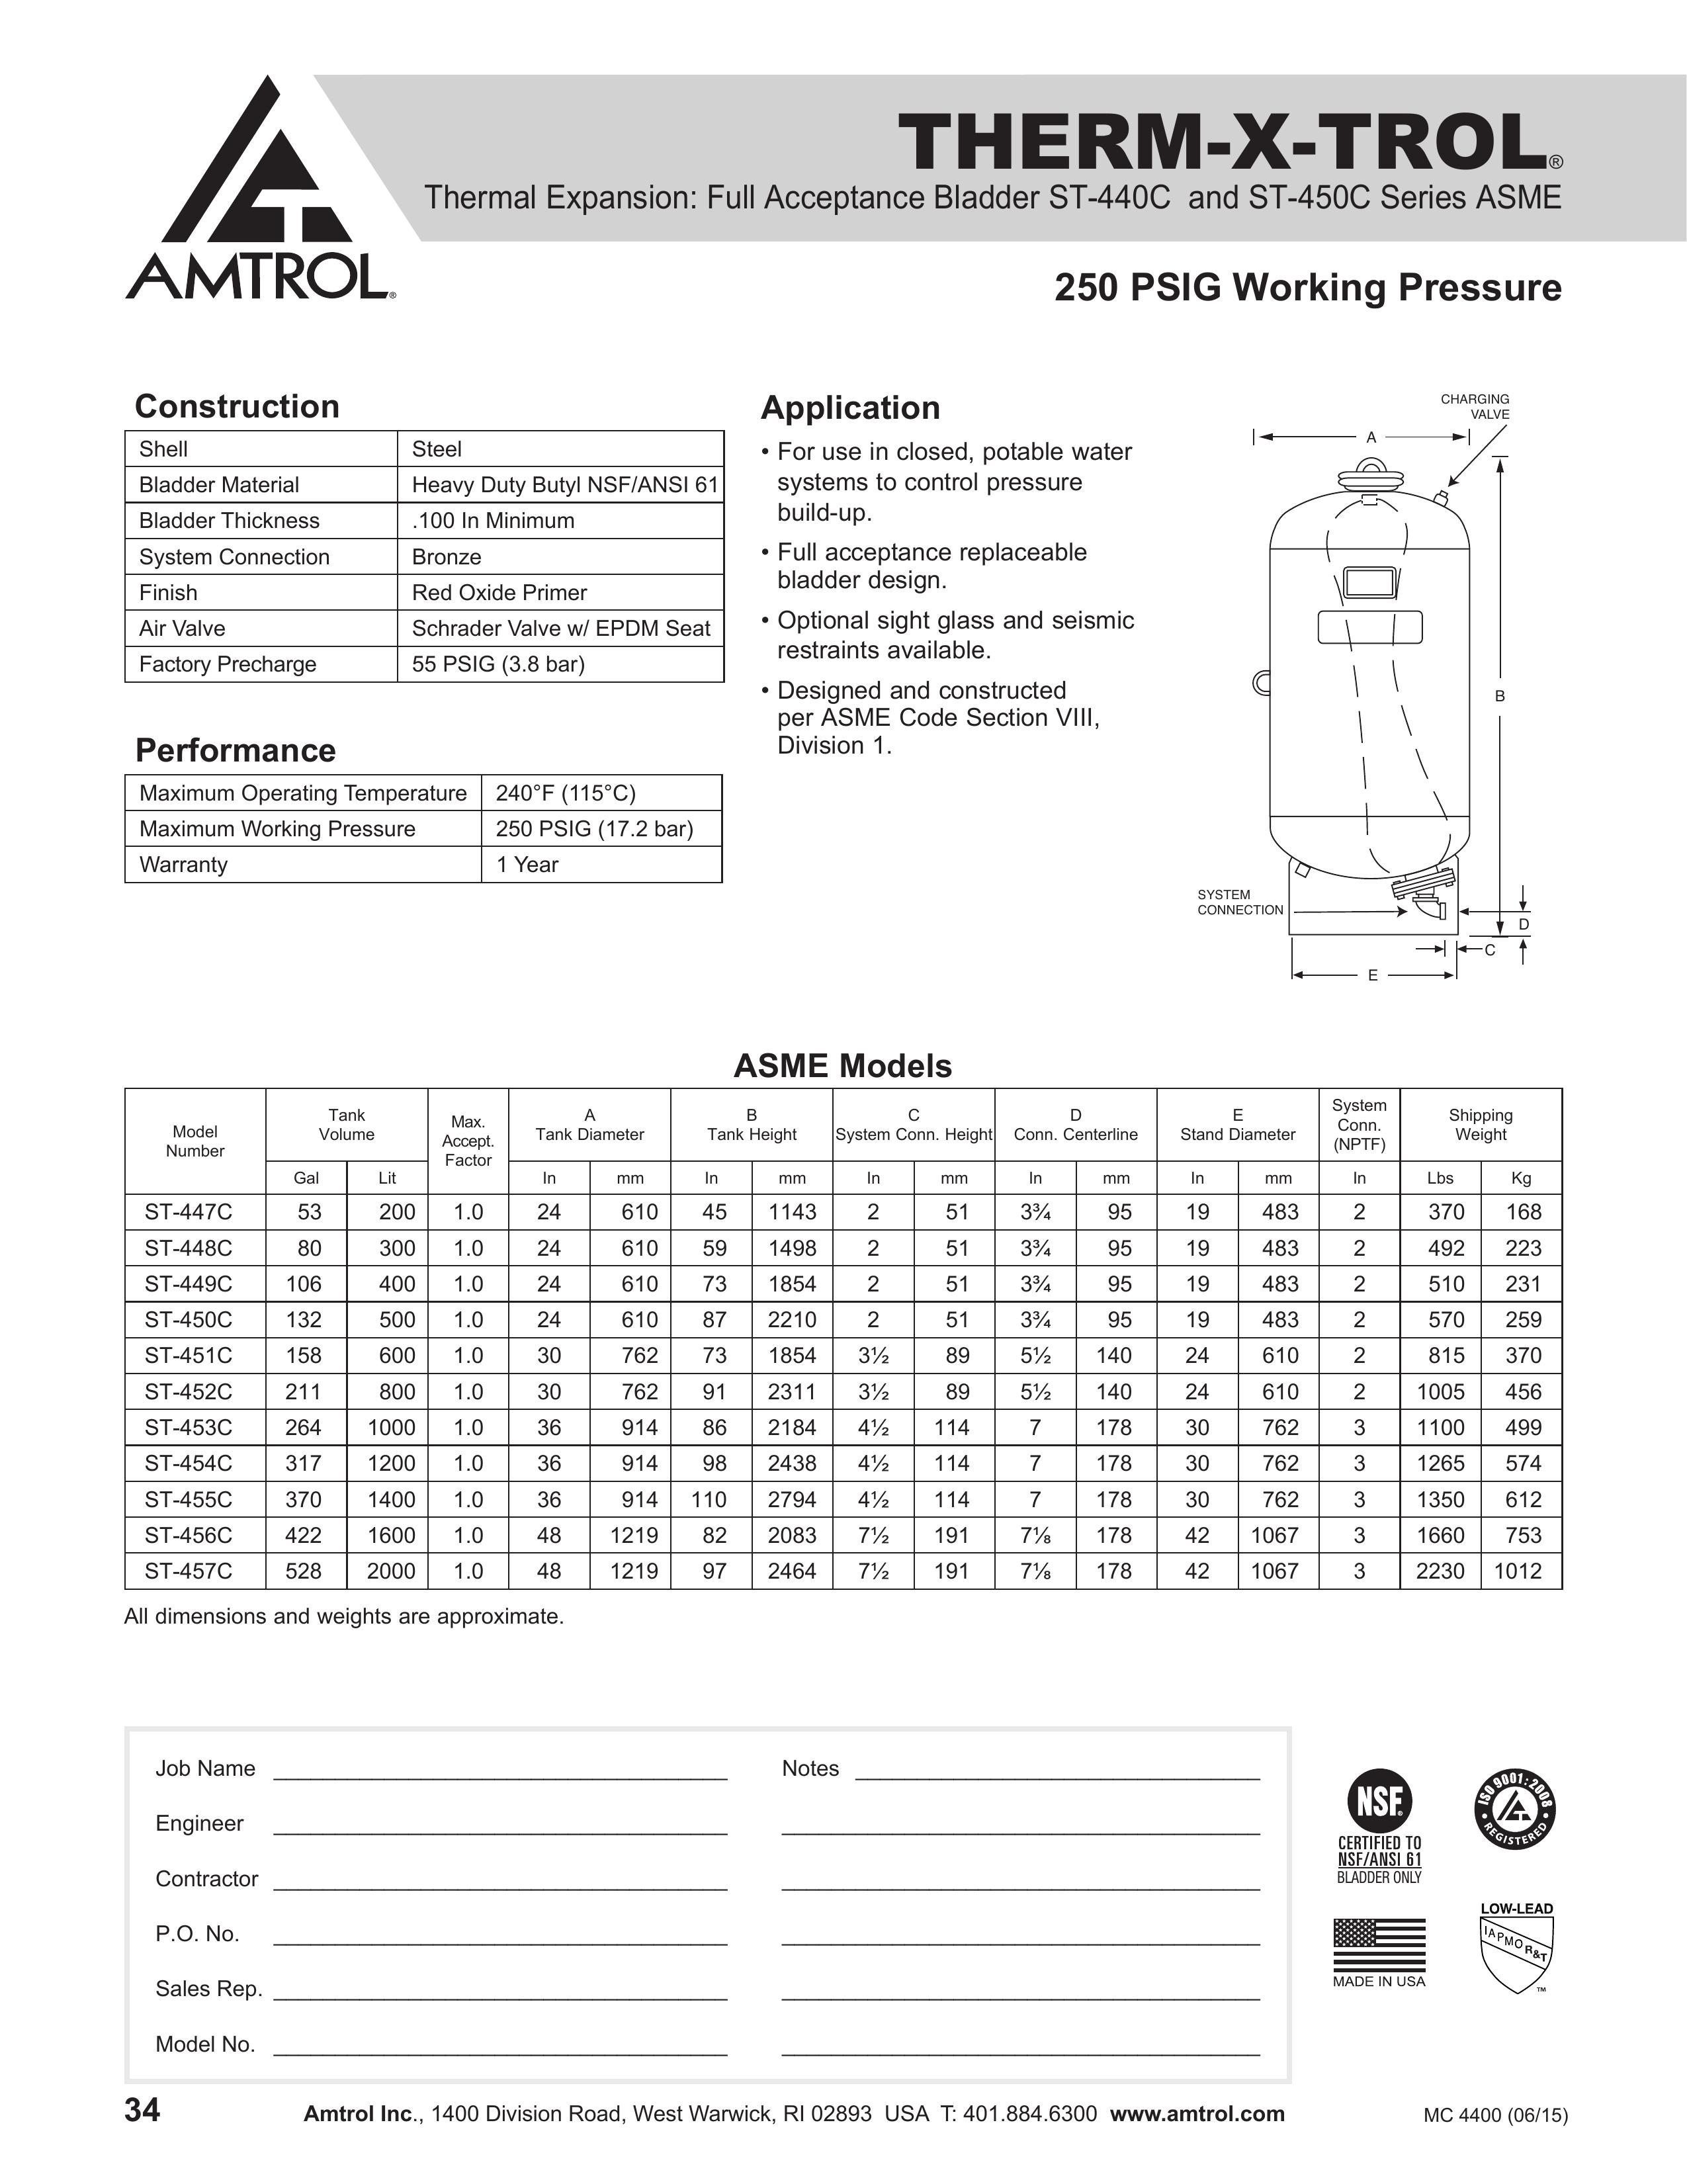 Amtrol ST-455C Slow Cooker User Manual